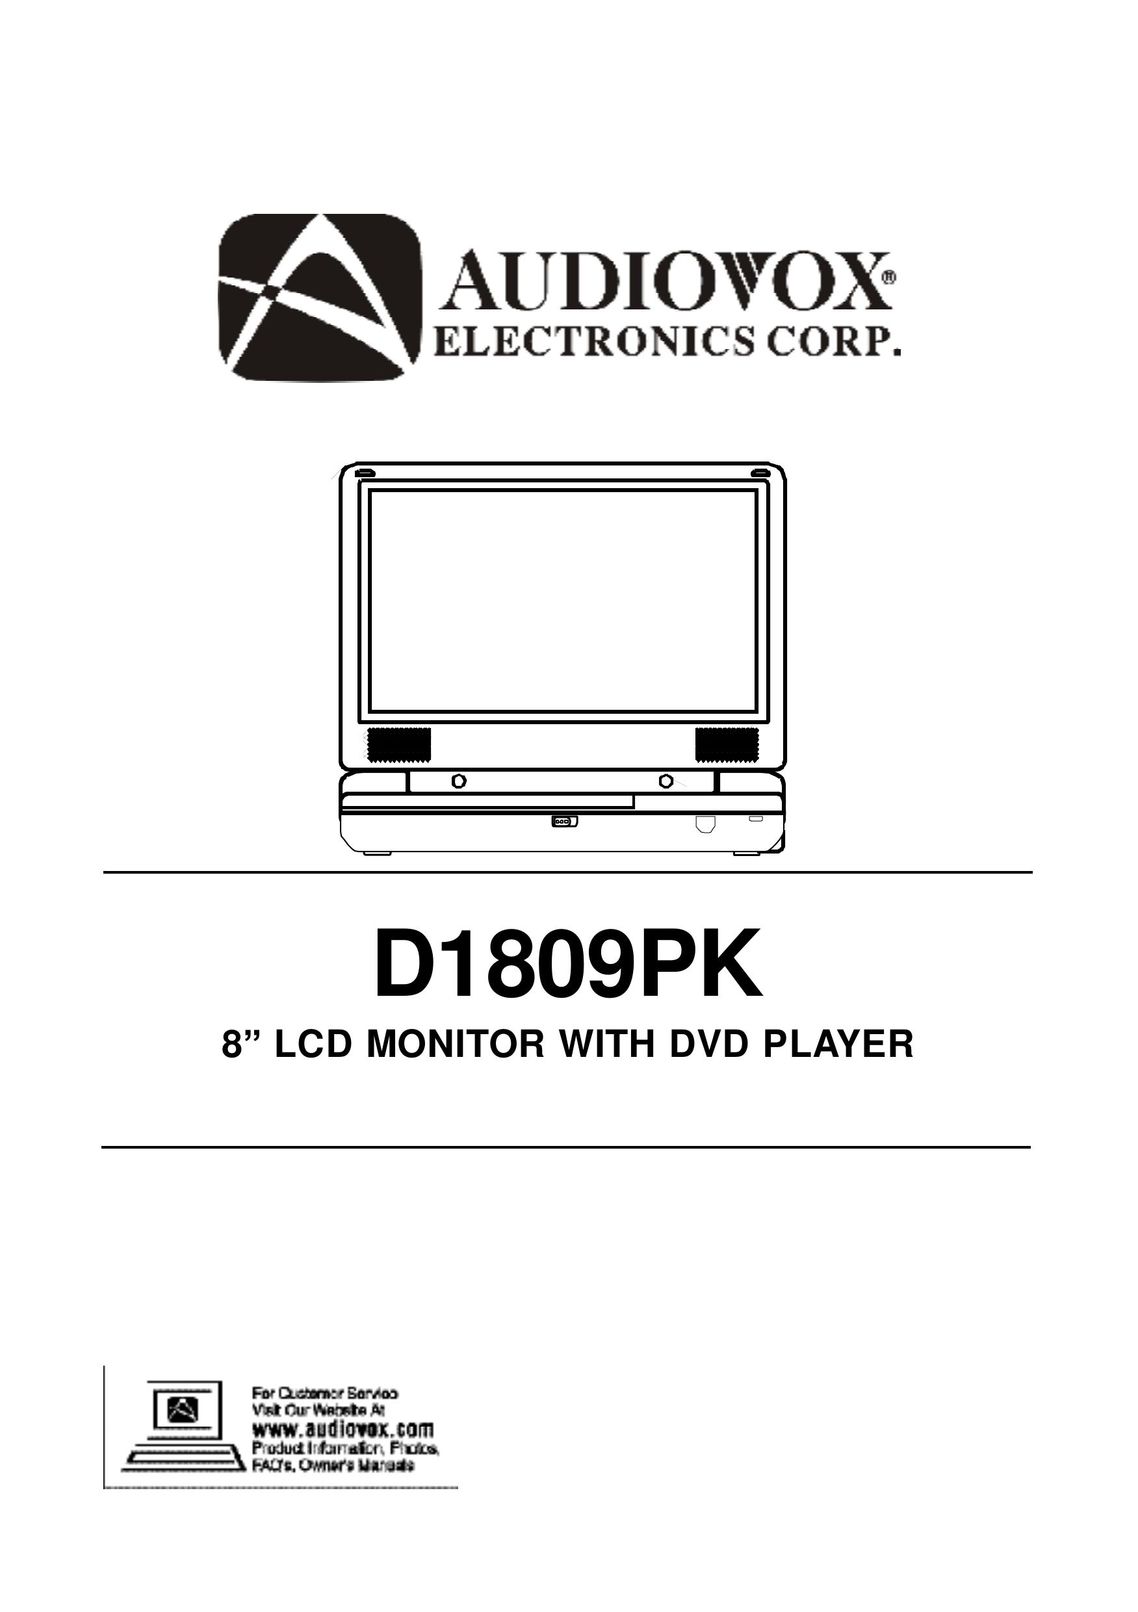 Audiovox D1809PK DVD Player User Manual